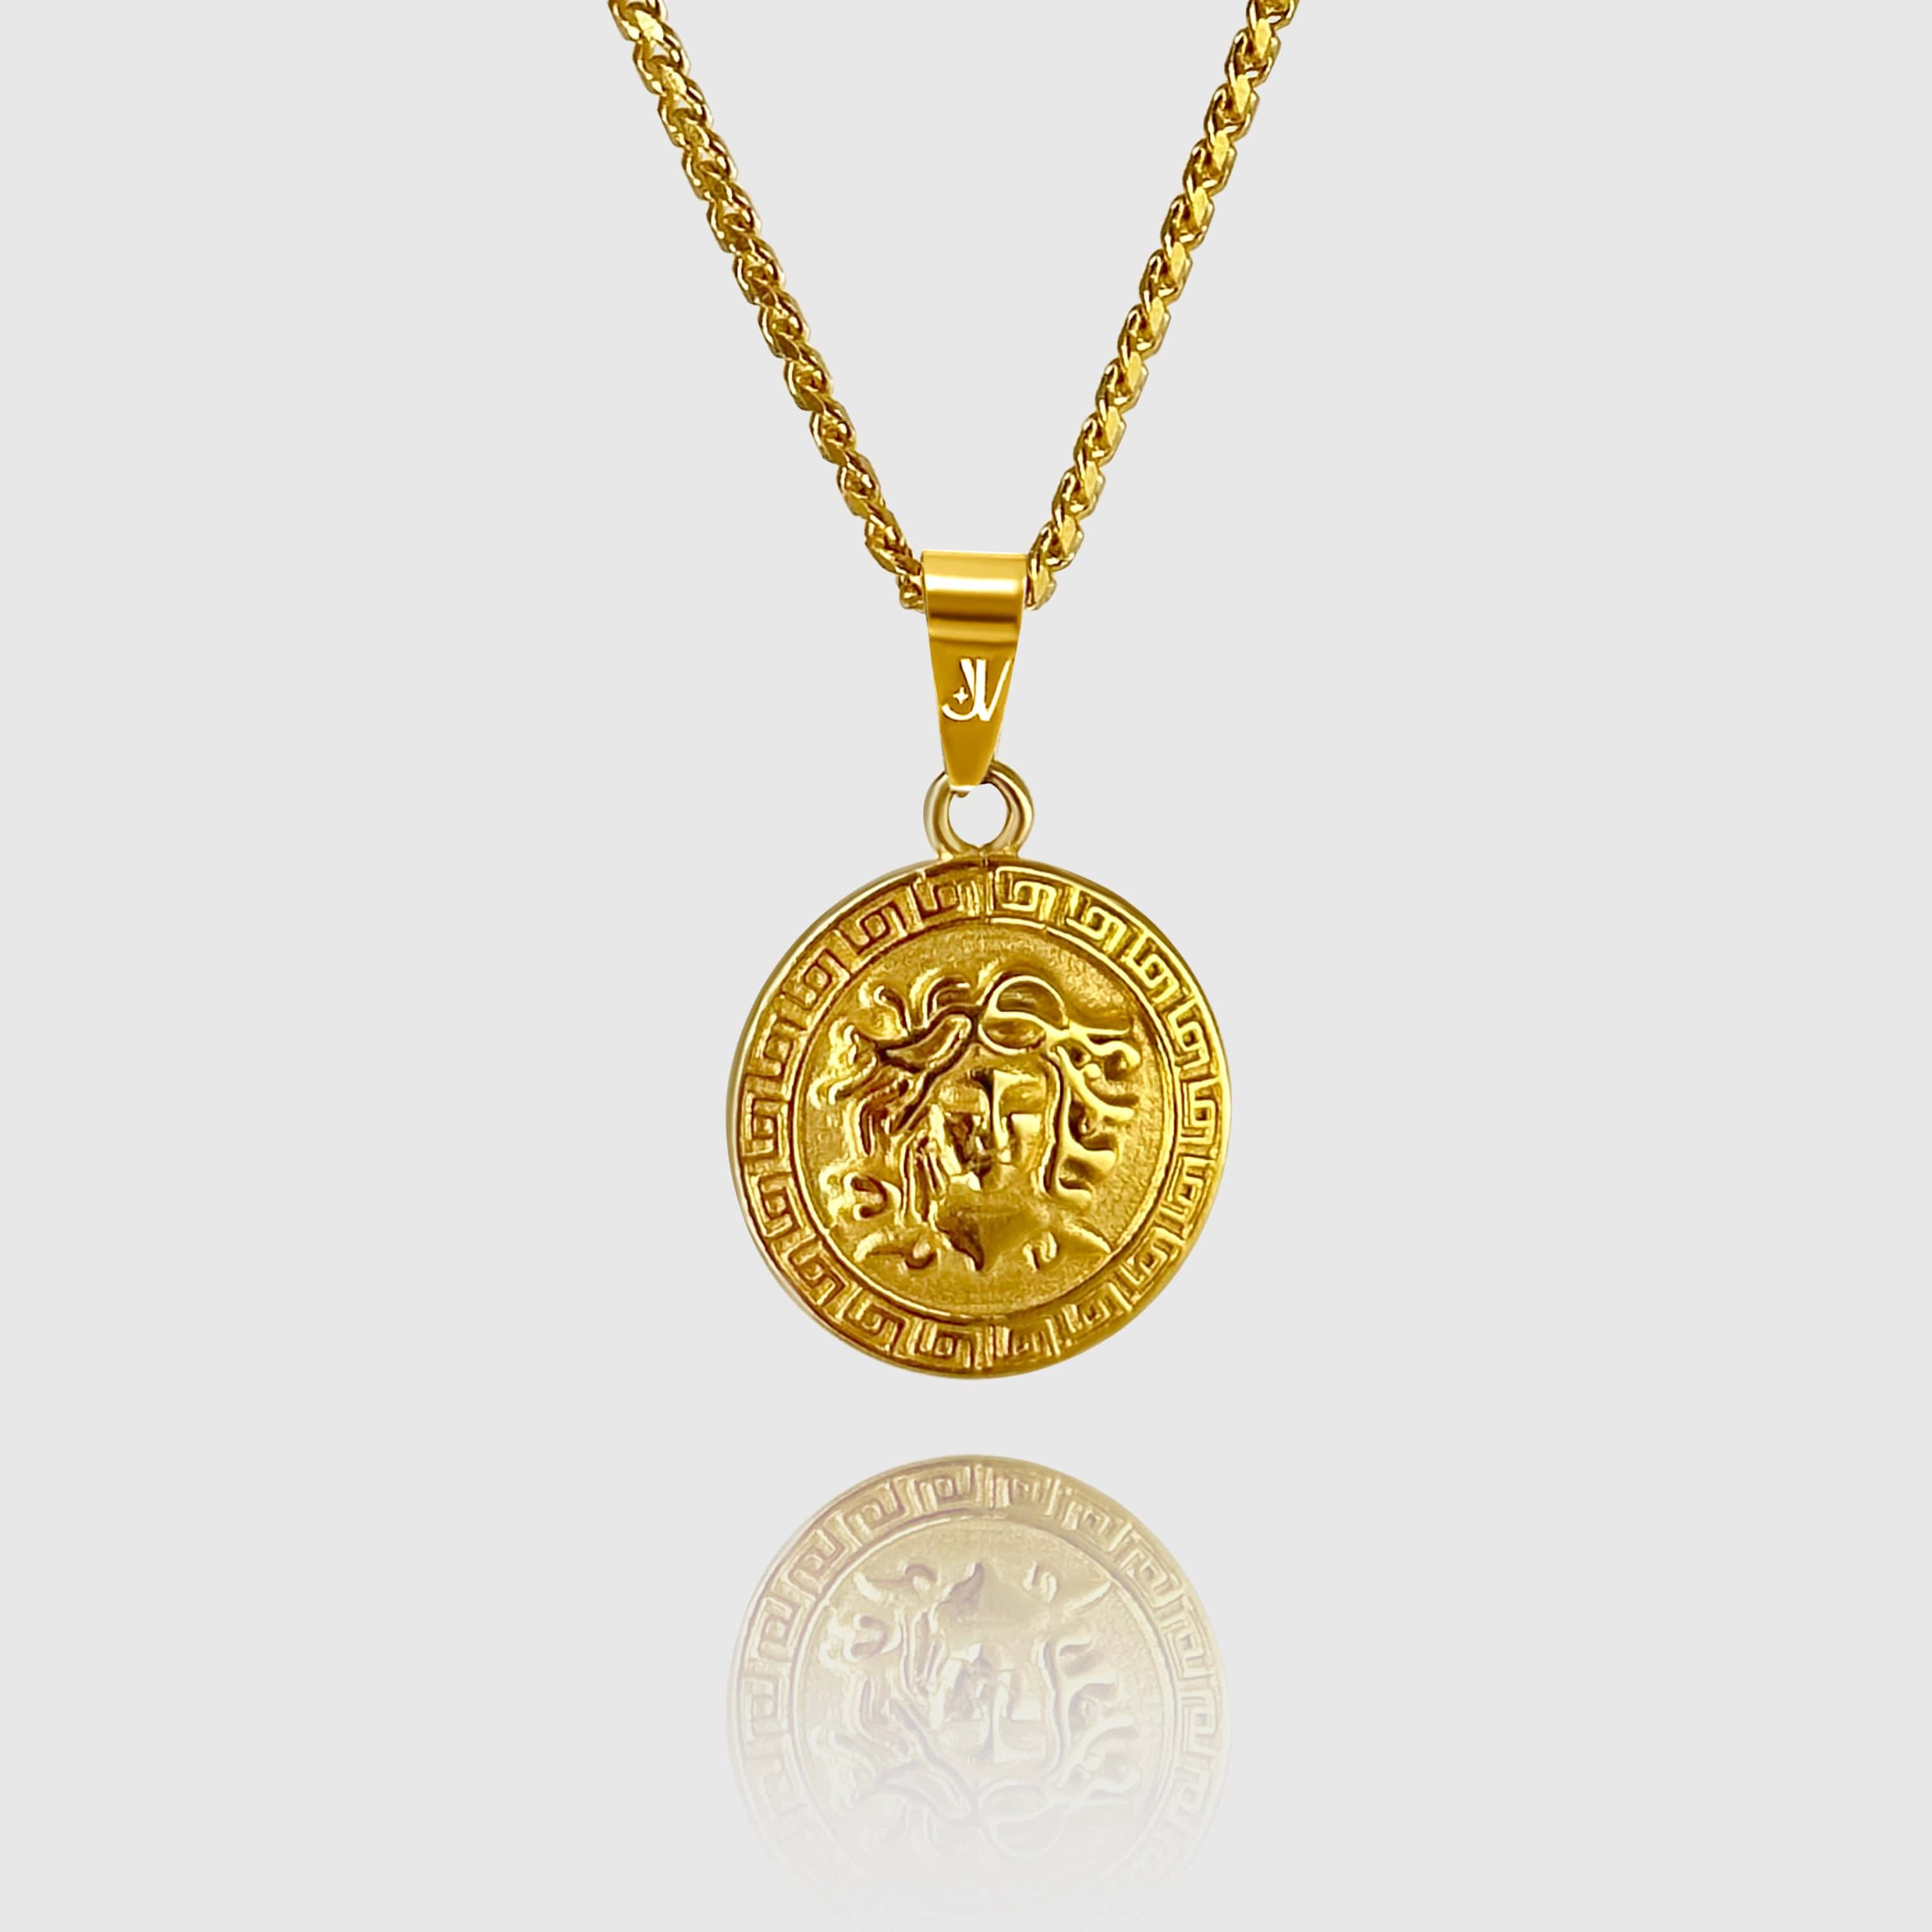 JVILLION Chain with Pendant Medusa Cuban Chain - Gold (4mm)